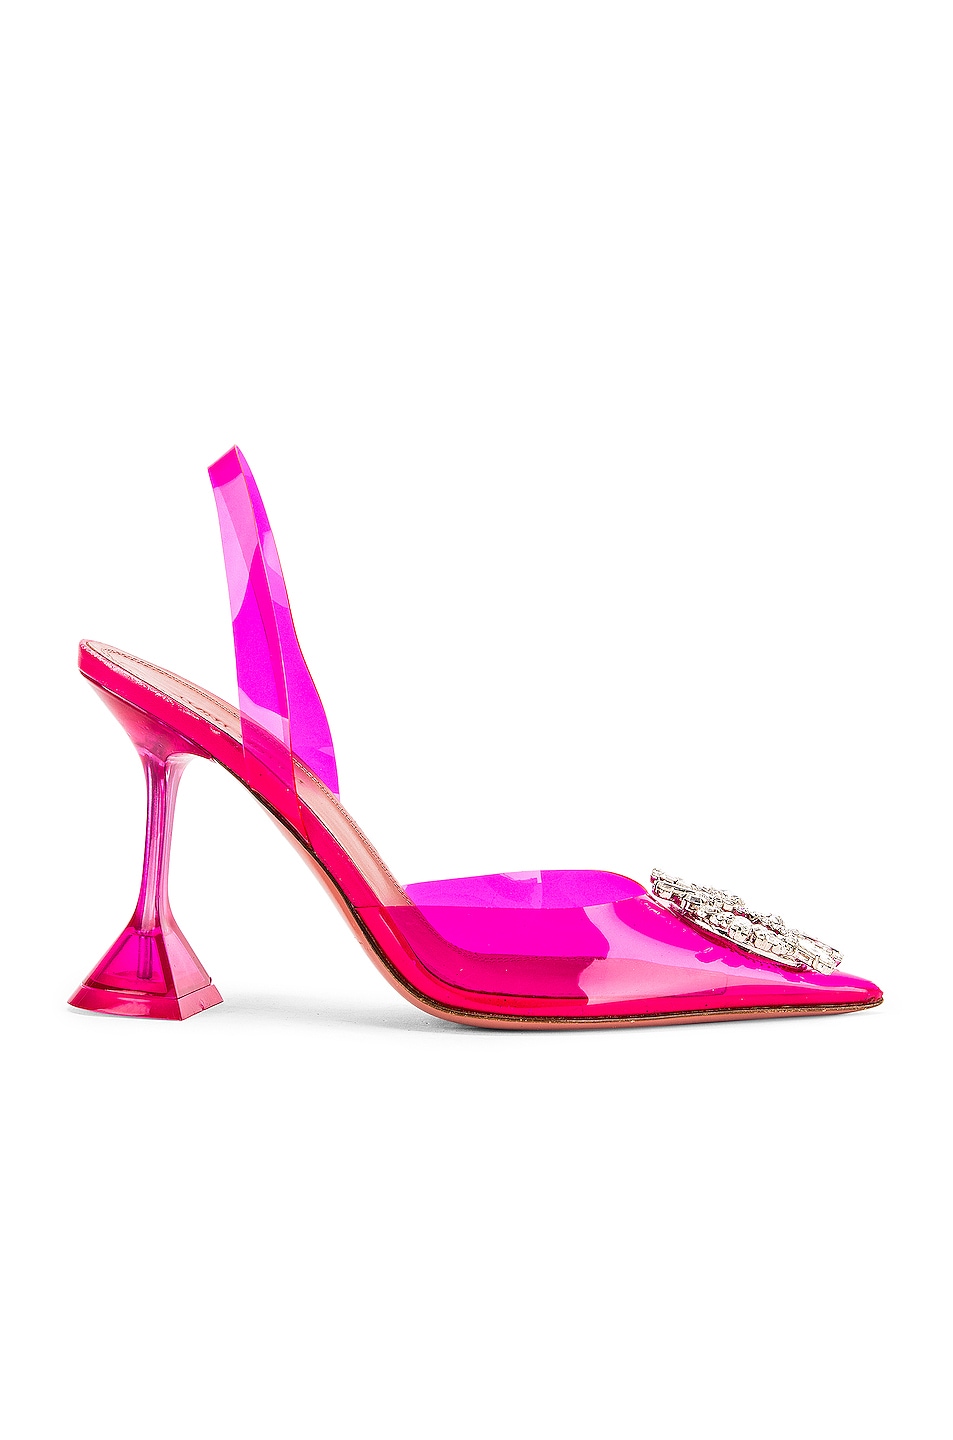 AMINA MUADDI Begum Glass Heel in Pink | FWRD